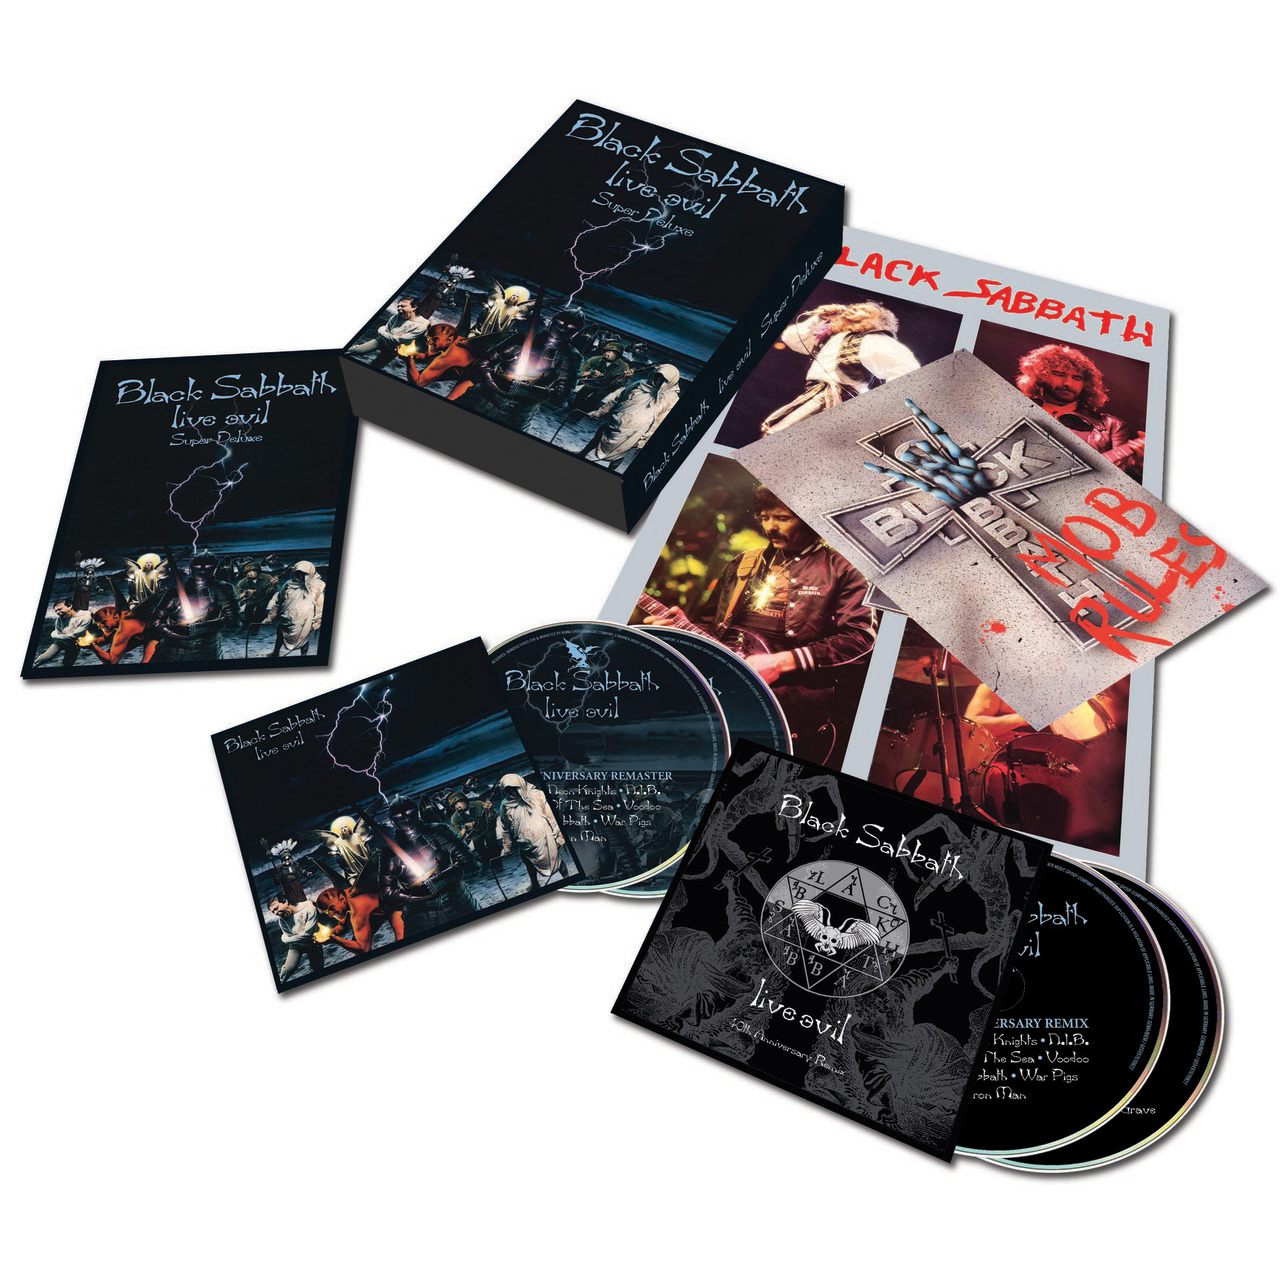 Live Evil (2023 Remaster): Super Deluxe 4CD Box Set